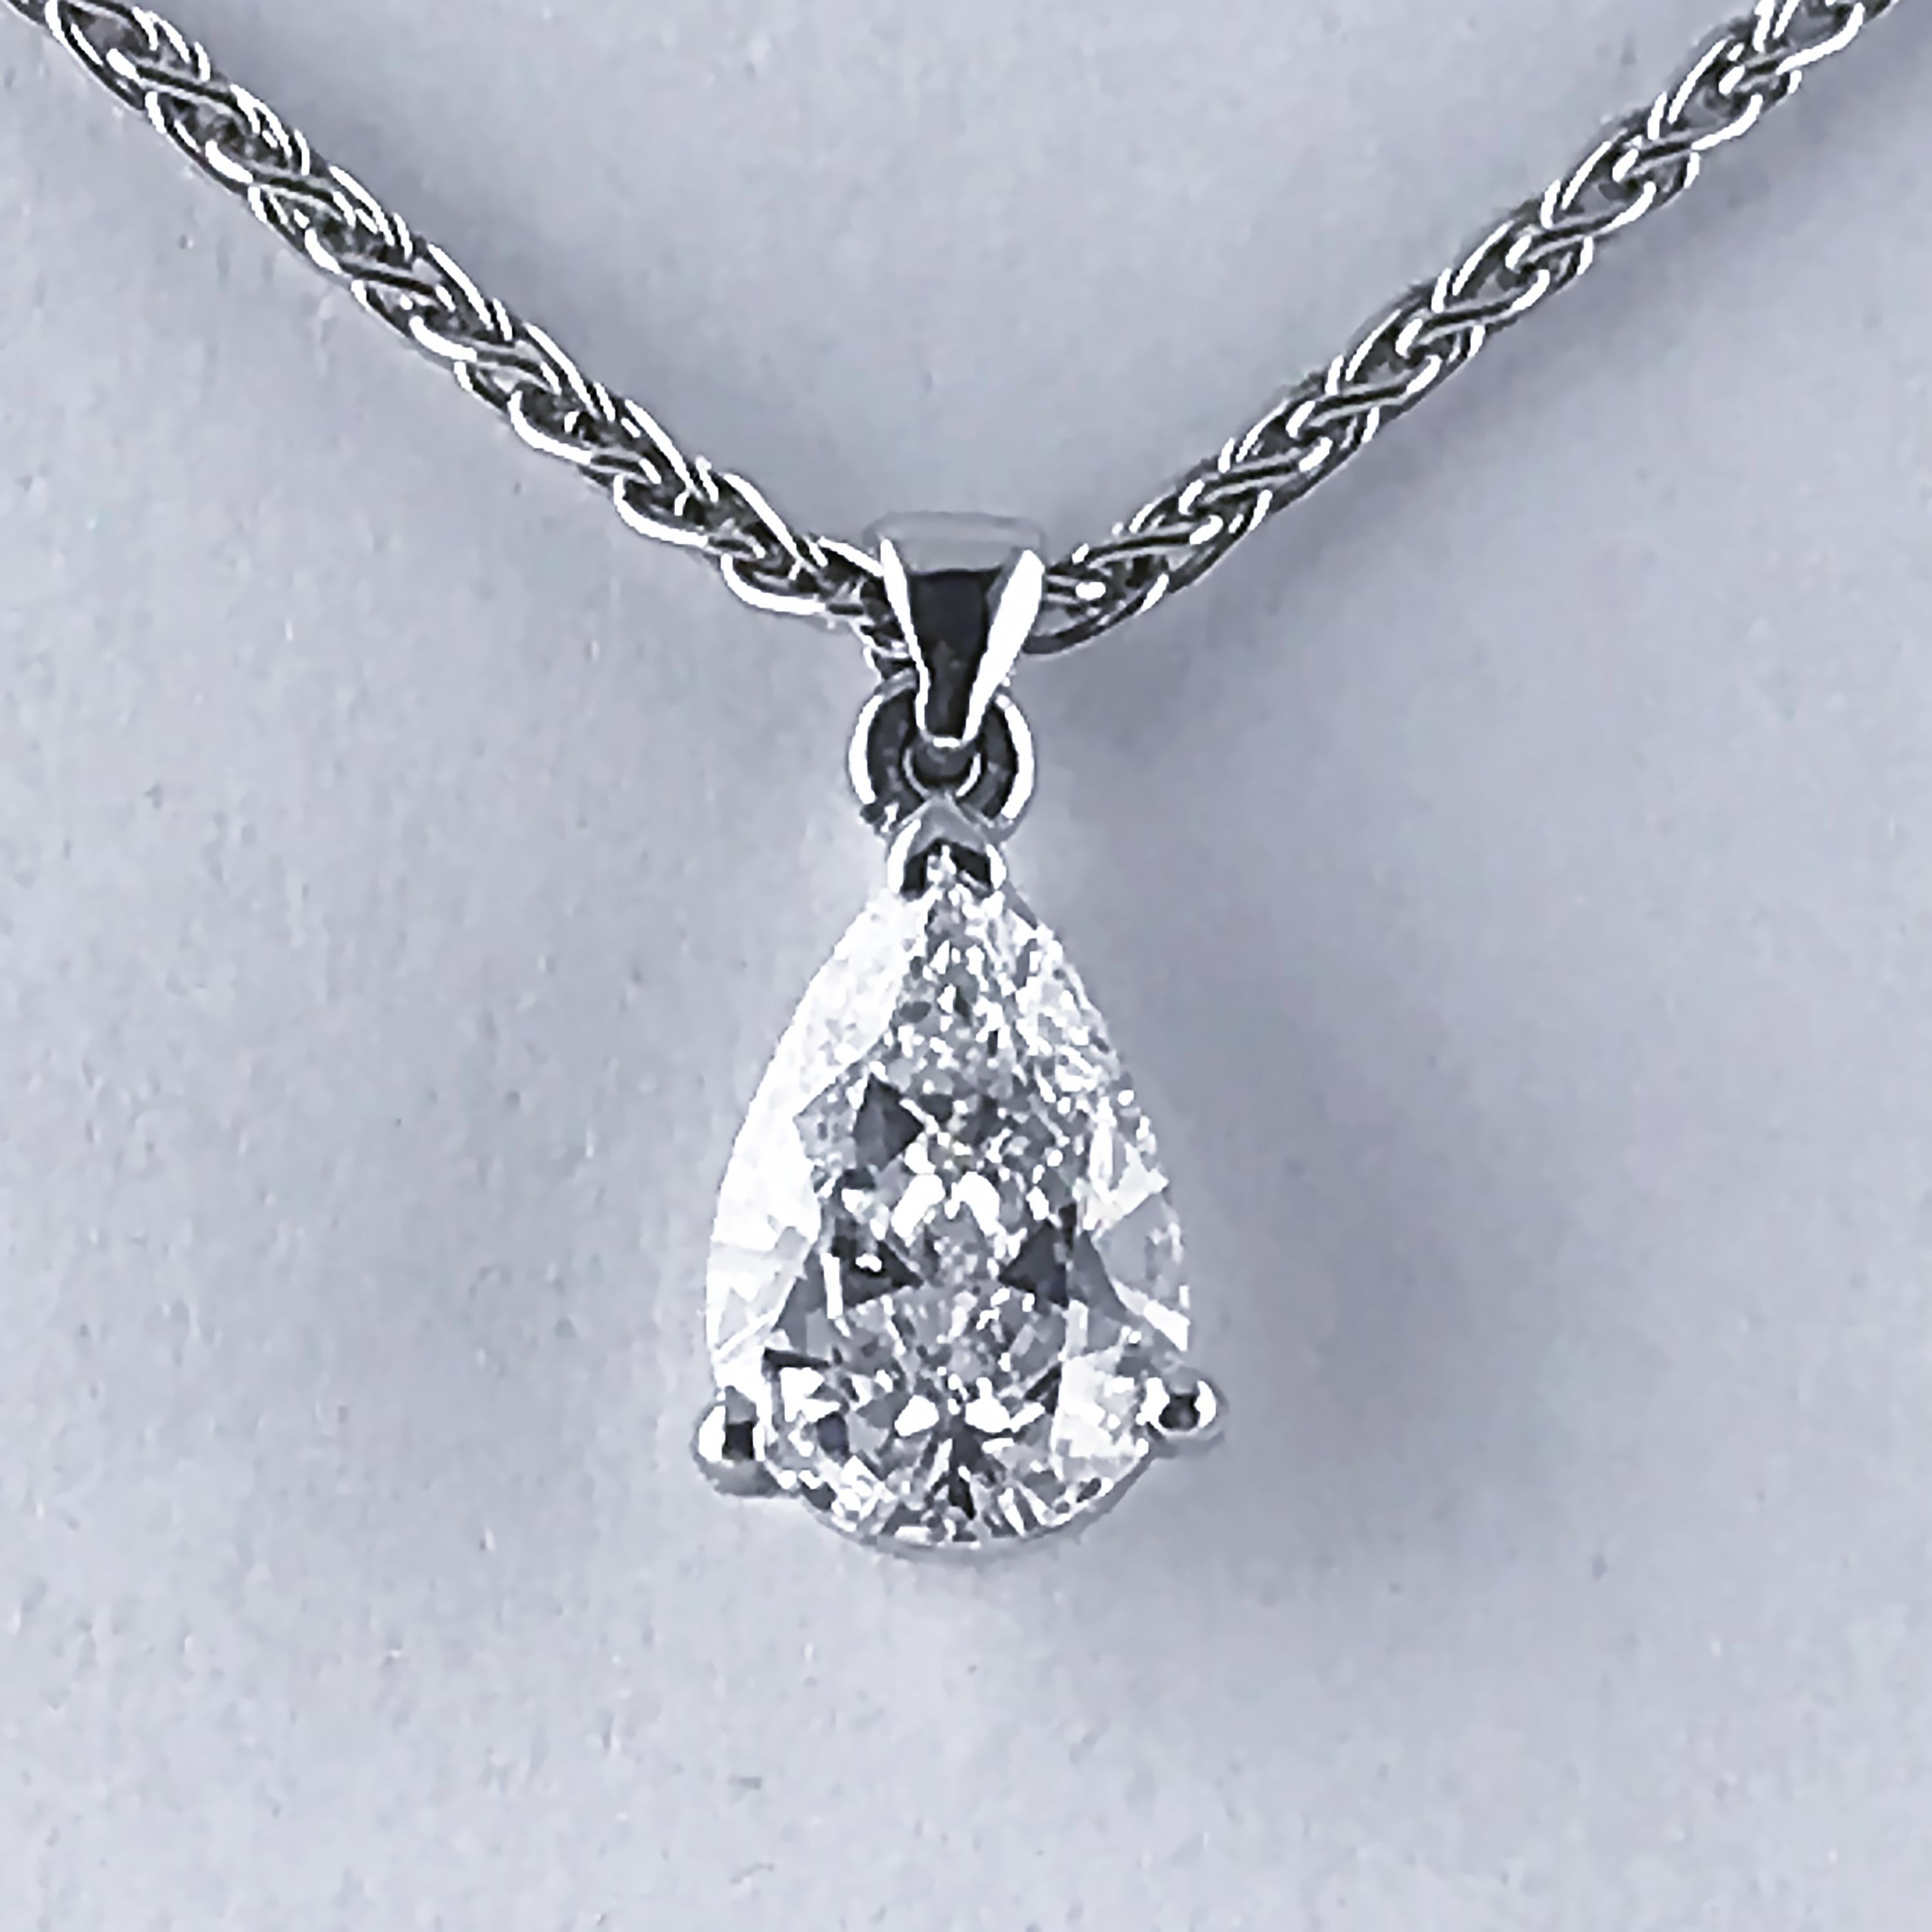 Women's or Men's Certified 0.70 Carat Pear Shape D Color Diamond Drop Pendant